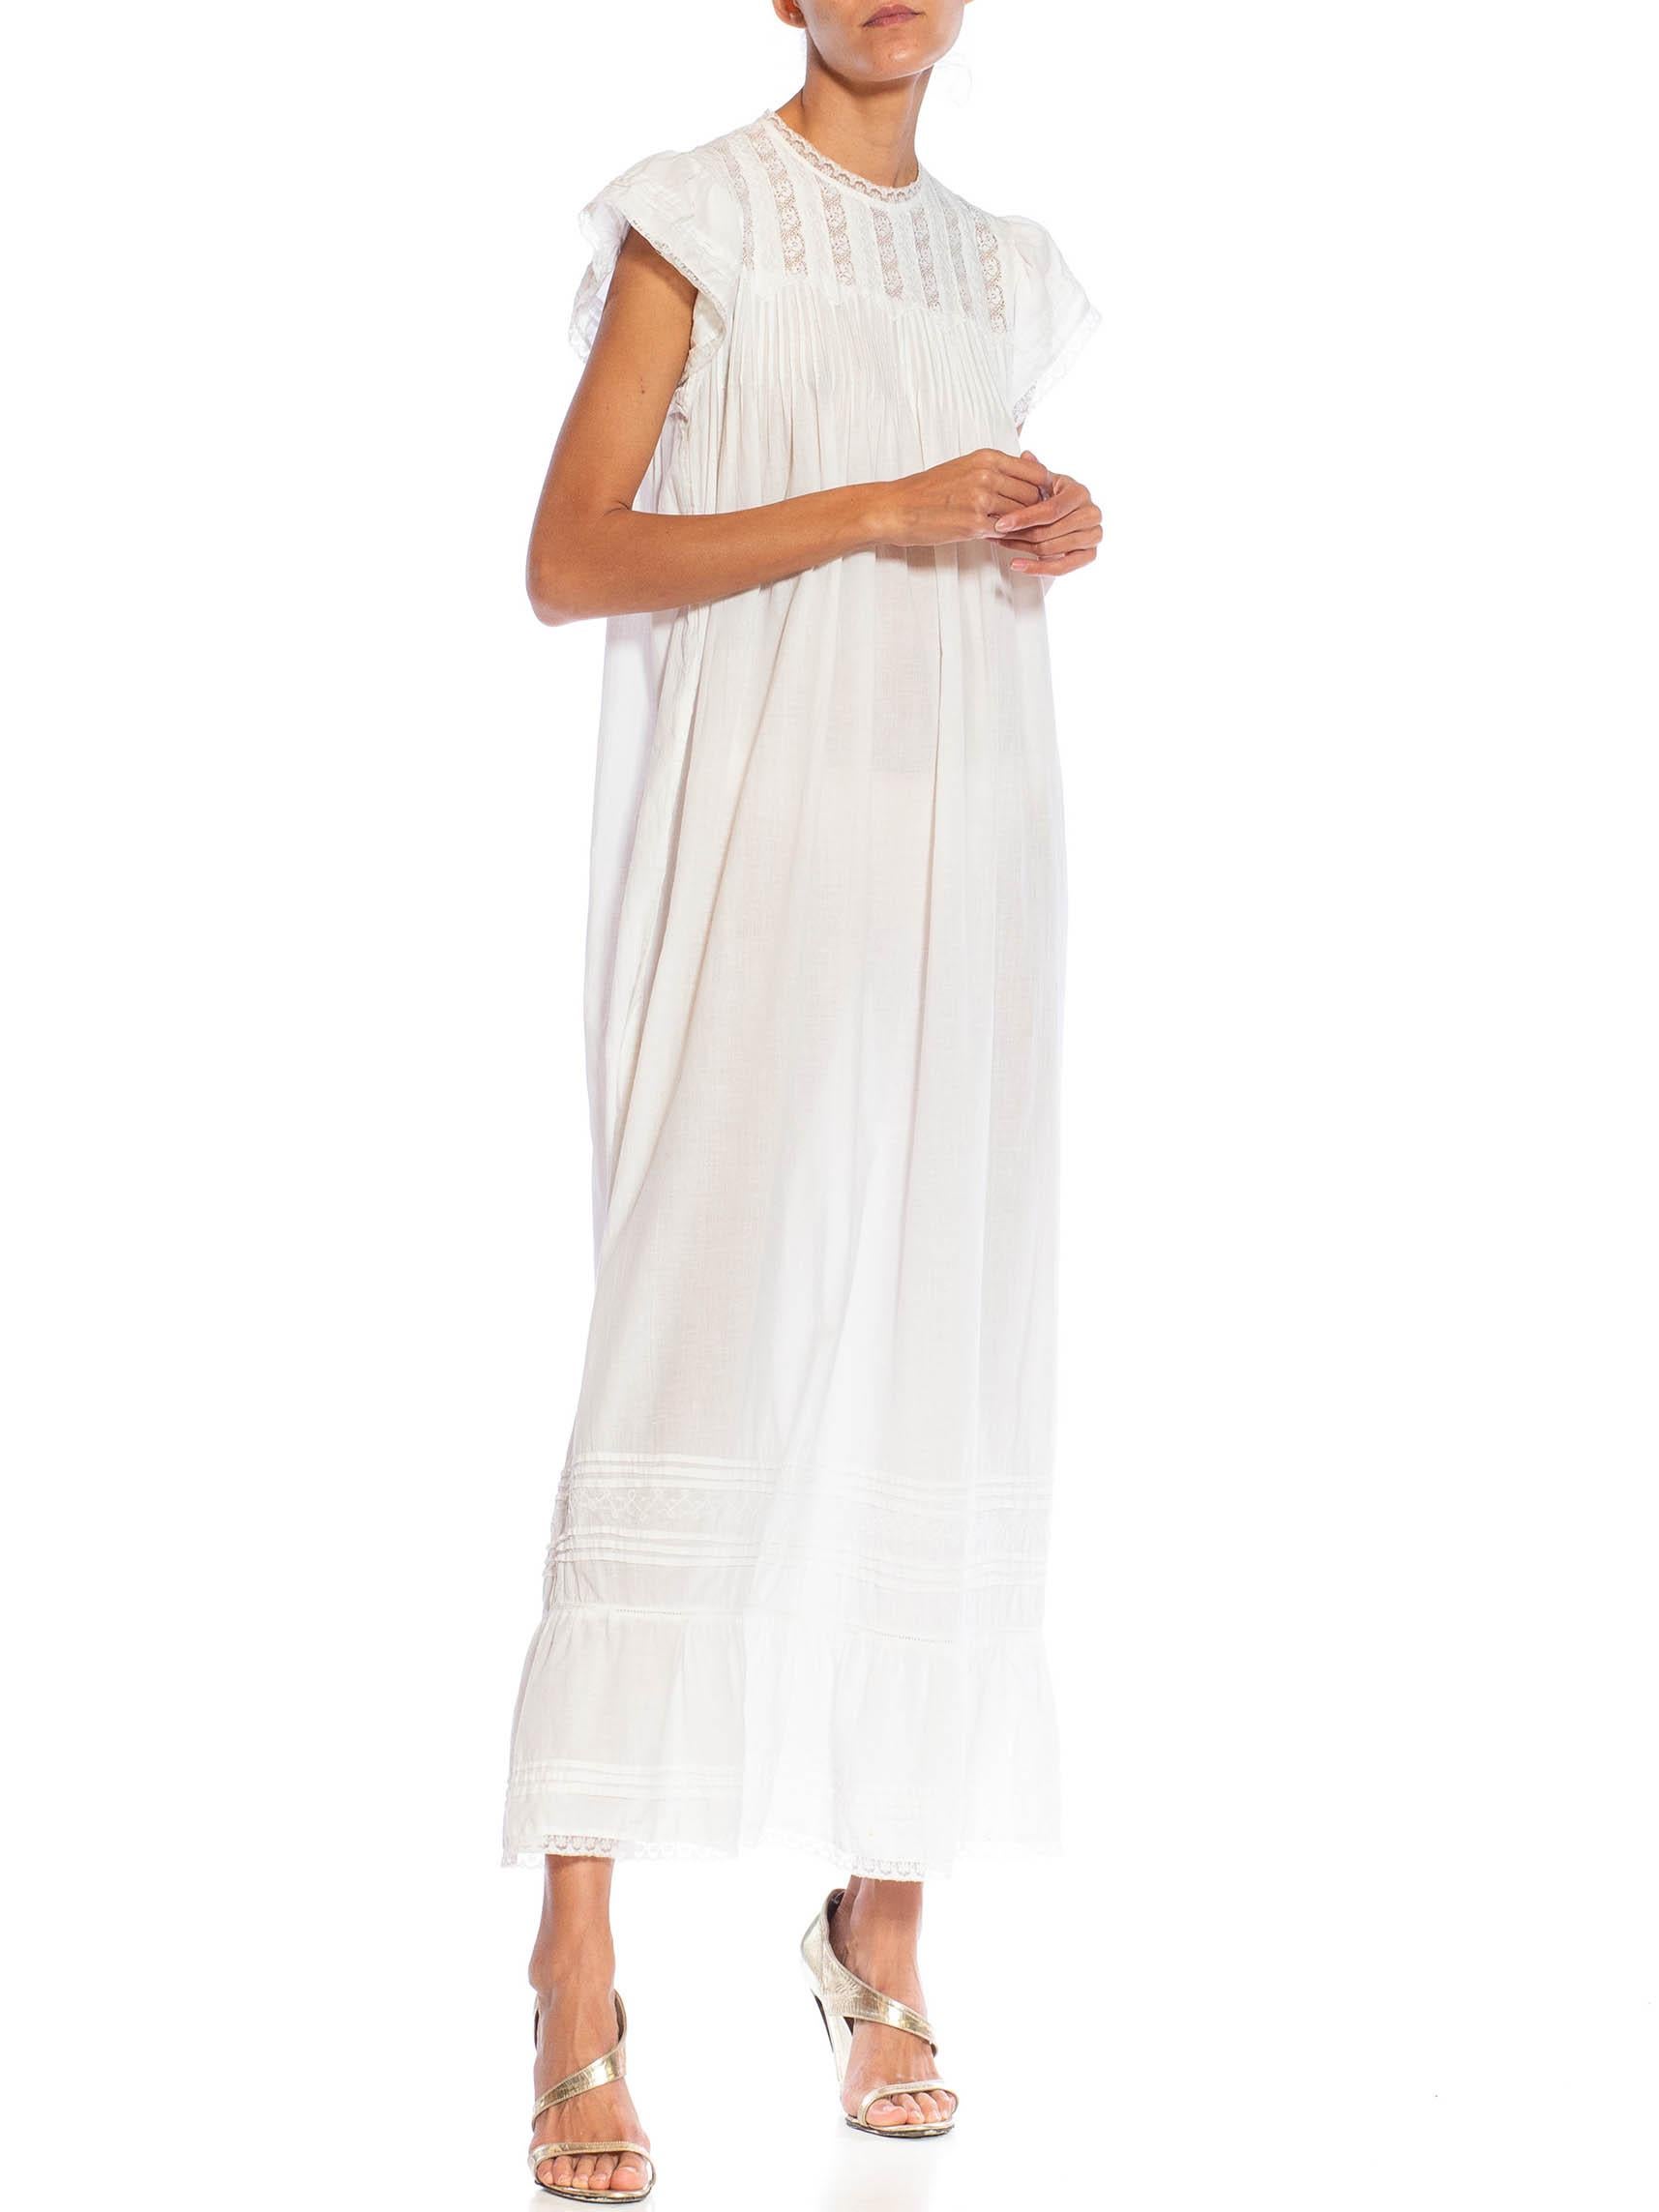 1950S White Cotton Victorian Style Night Shirt Dress 5